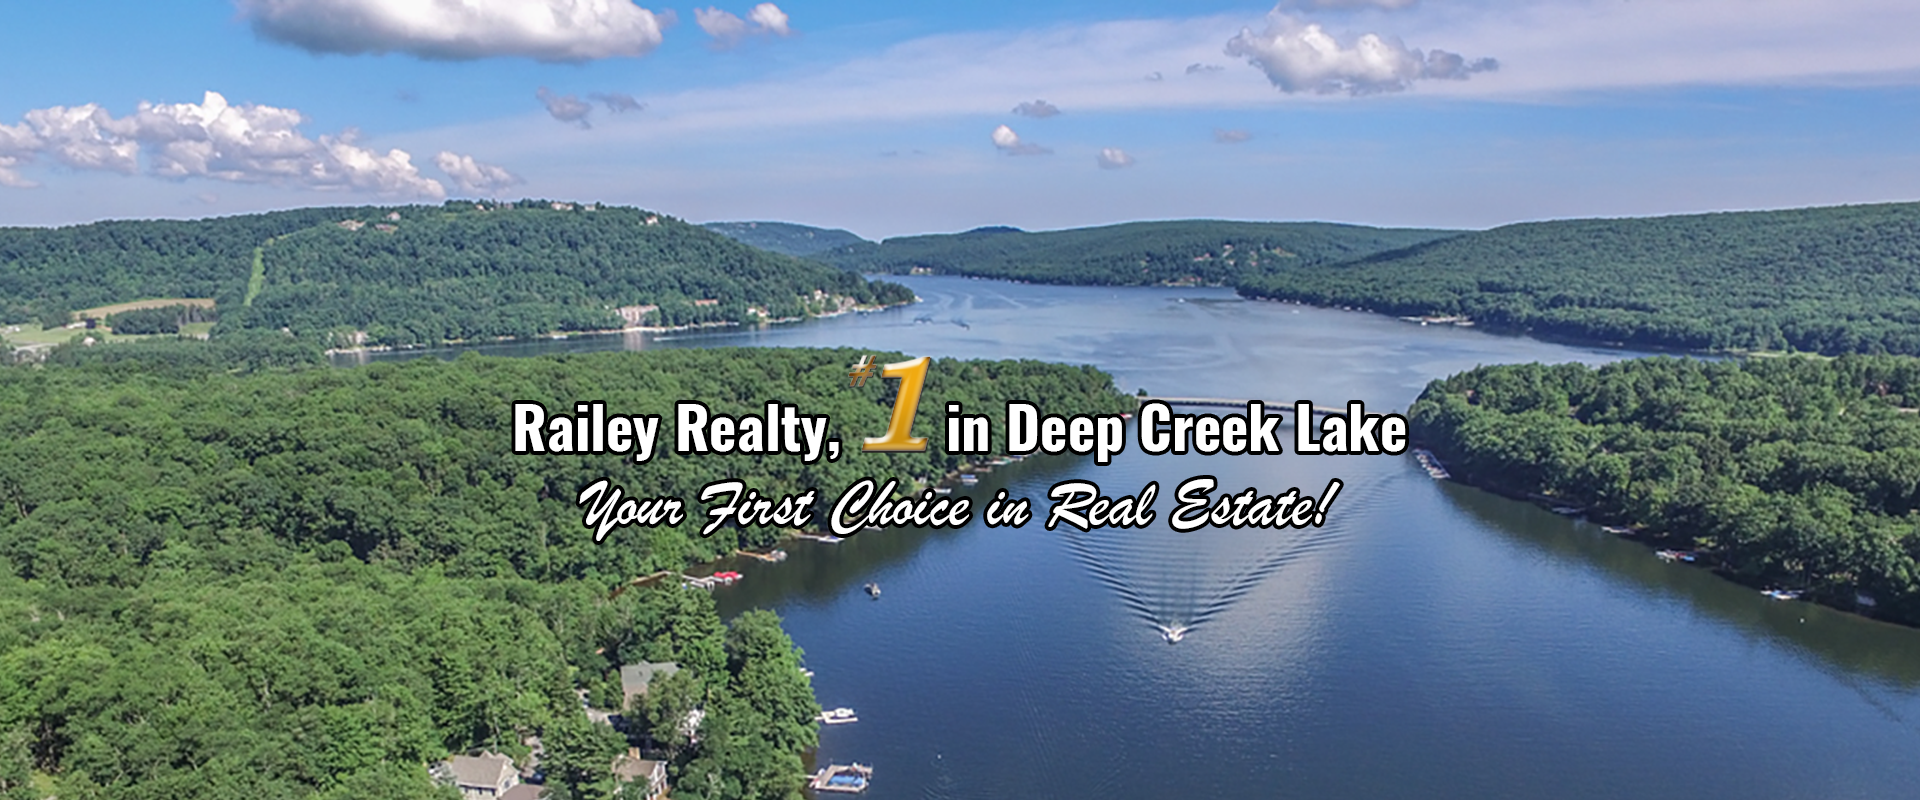 Deep Creek Lake Maryland Real Estate & Homes For Sale - Railey Realty ...